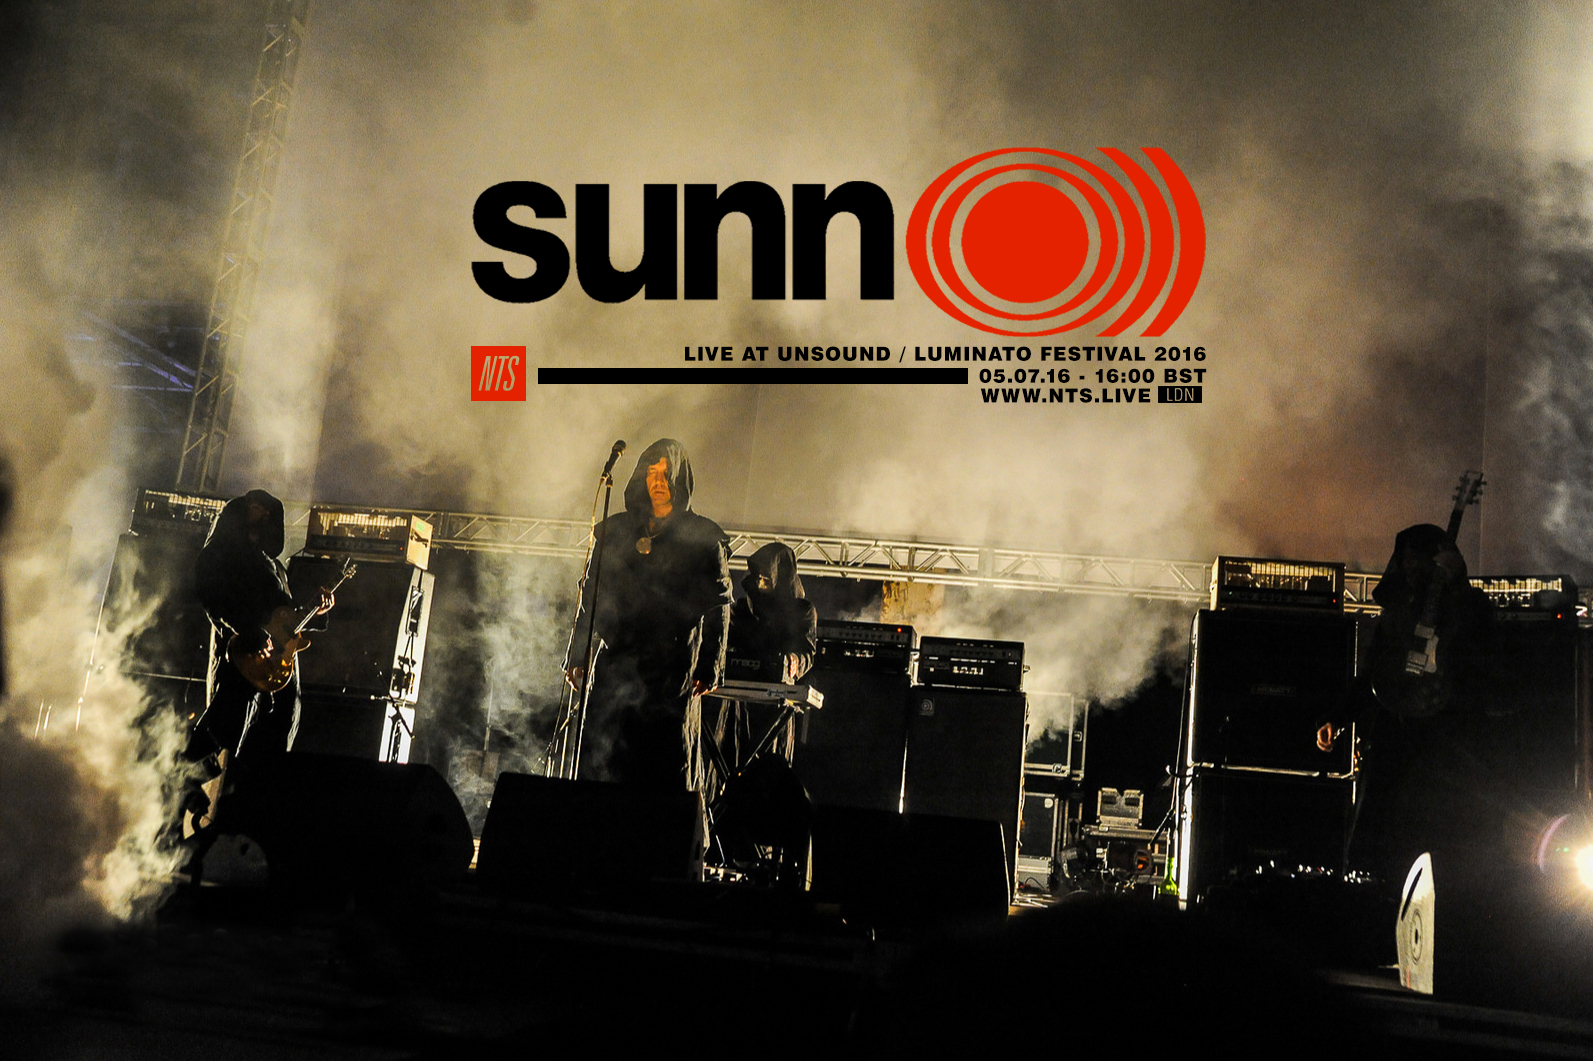 SUNN O))) live Toronto Unsound/Luminato fest broadcast